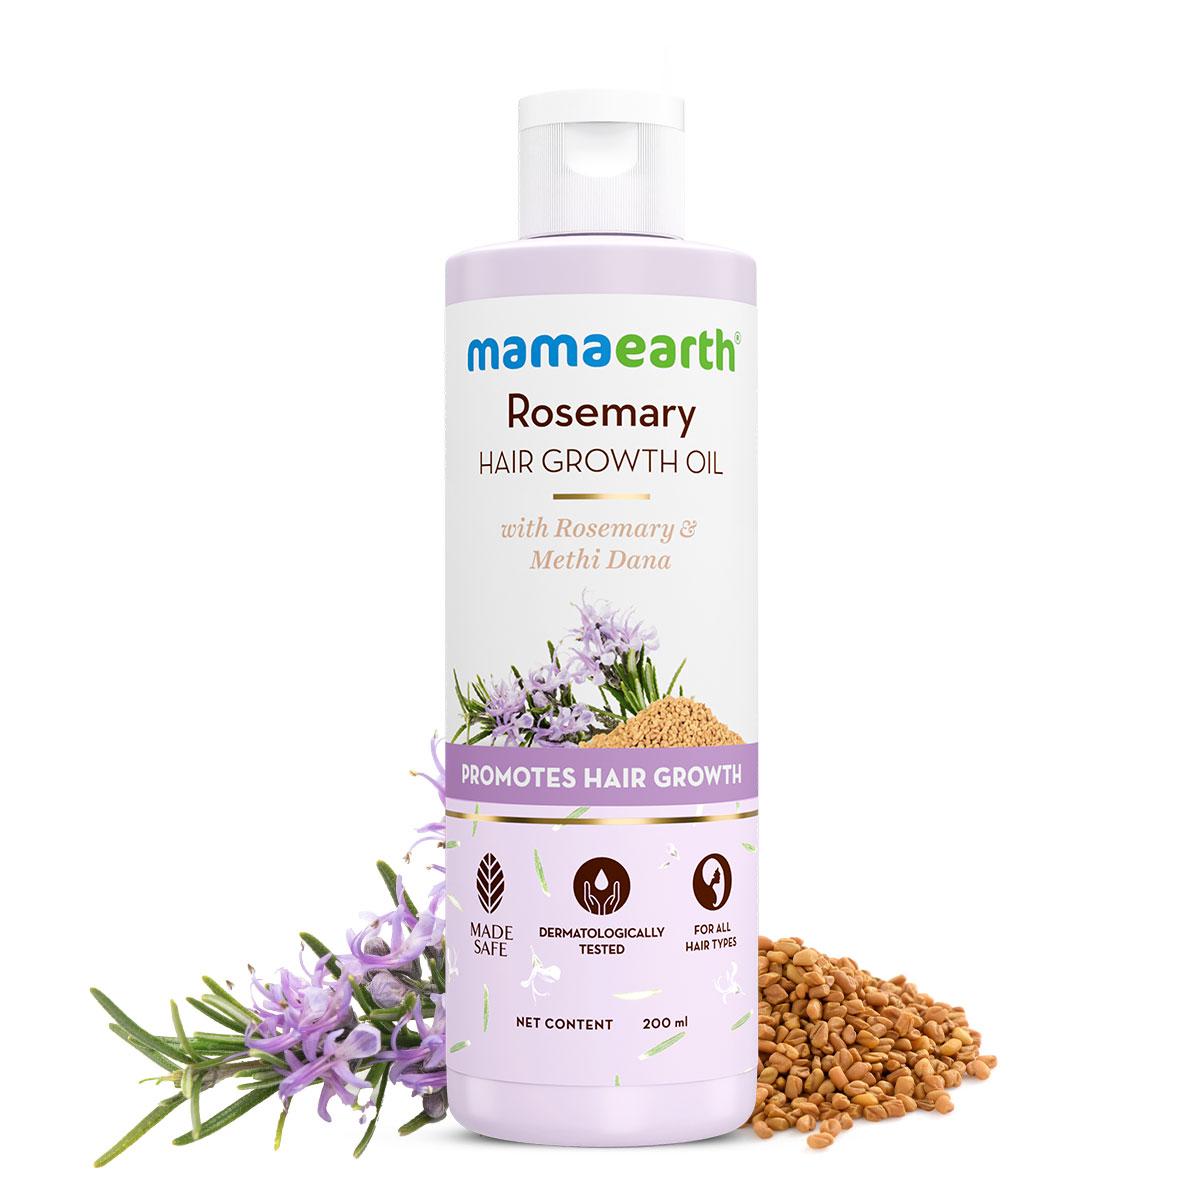 rosemary hair growth oil with rosemary & methi dana for promoting hair growth - 200 ml